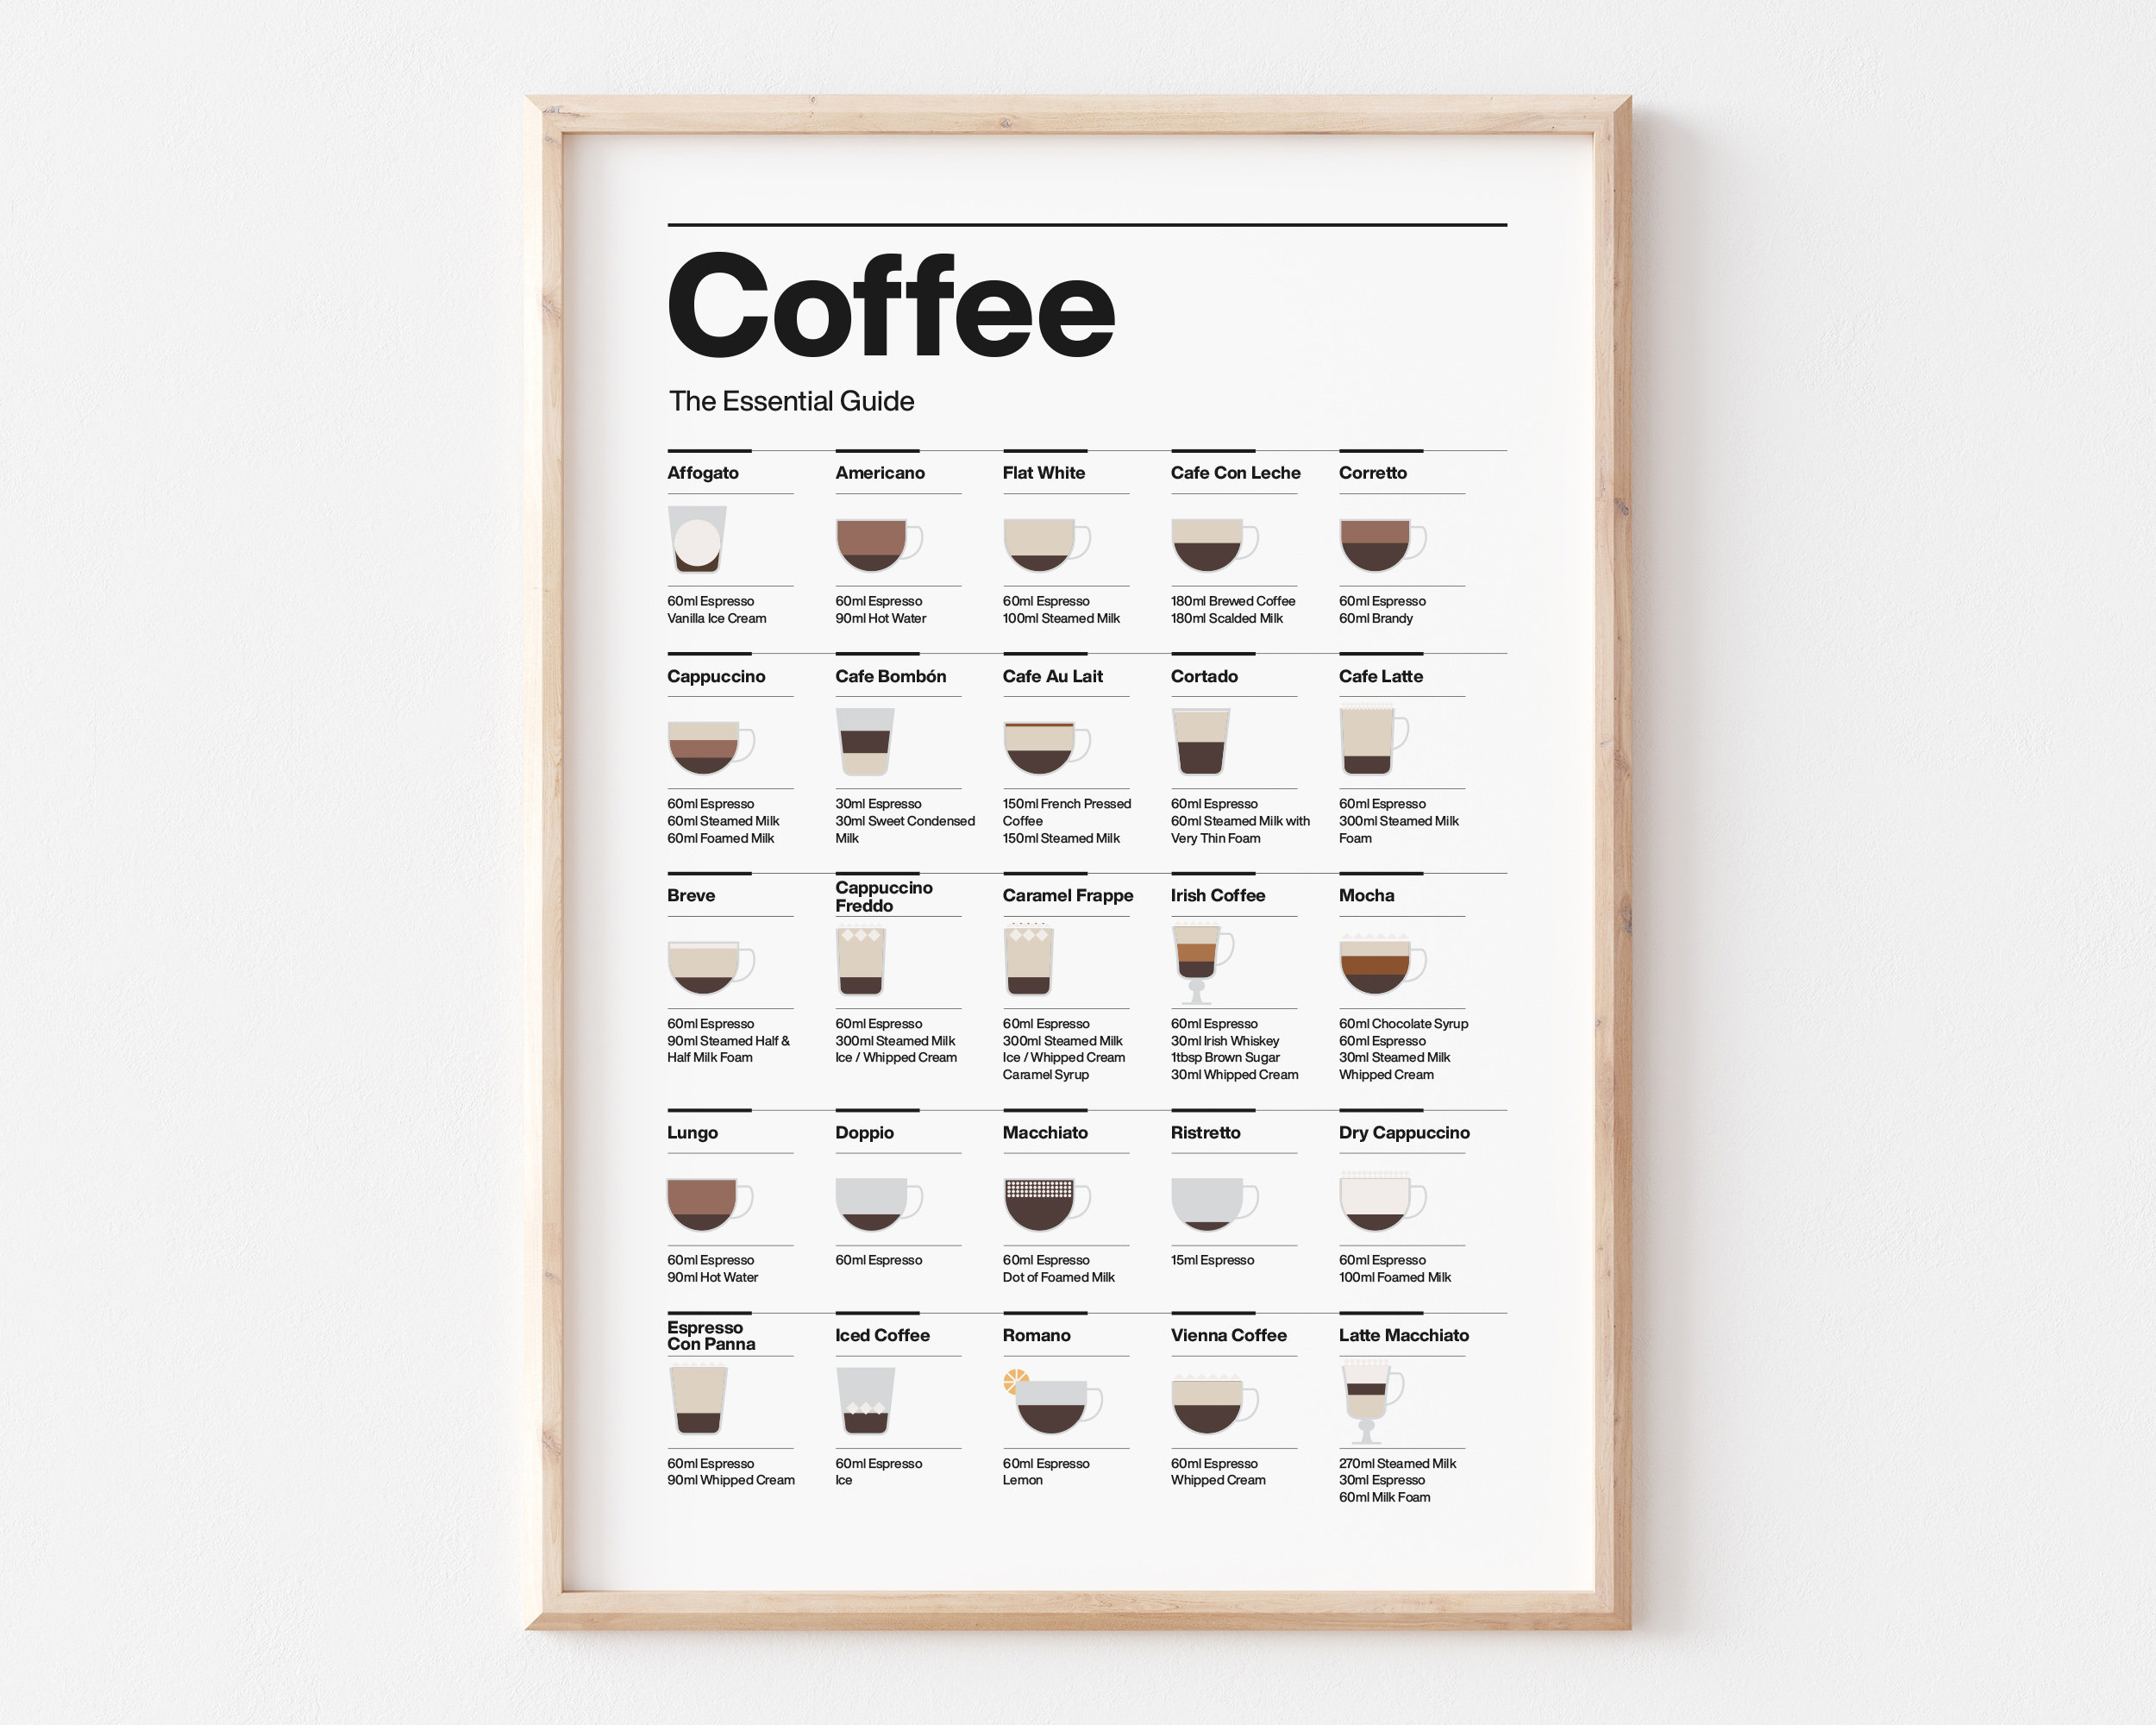 Essential Coffee Guide Print, Coffee Types Art, Coffee House Menu Art,  Latte, Filter Coffee, Espresso, Cappuccino, Americano, Macchiato Art 